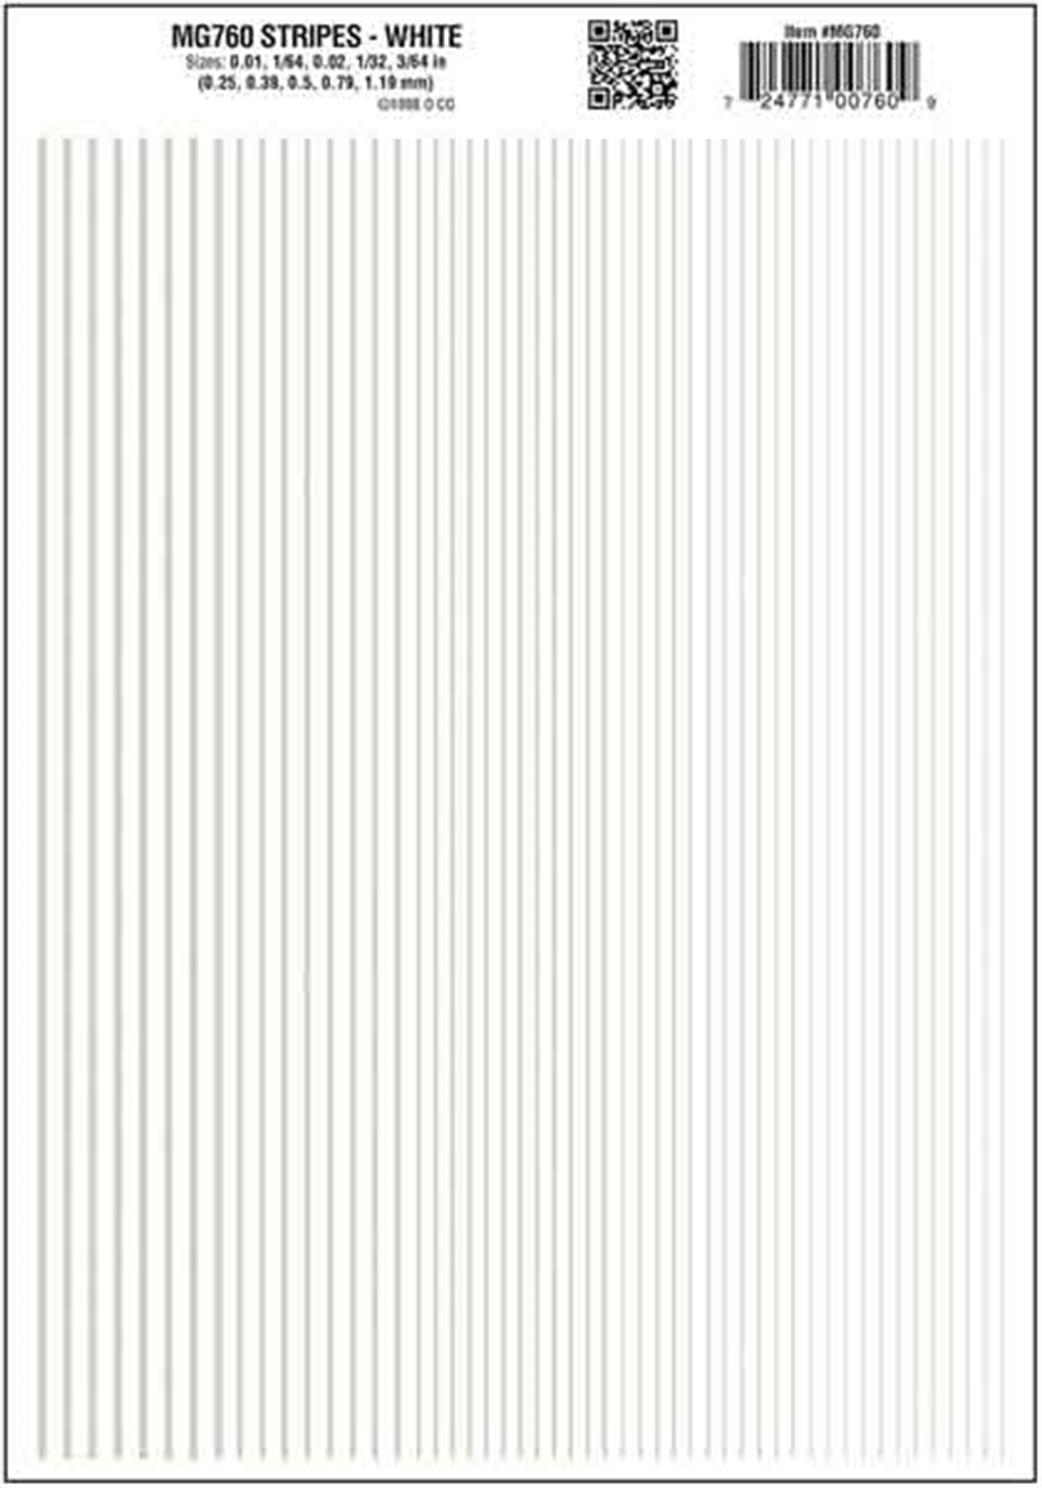 Woodland Scenics  MG760 Dry Transfer White Stripes 0.01 1/64 0.022 1/32 5/64